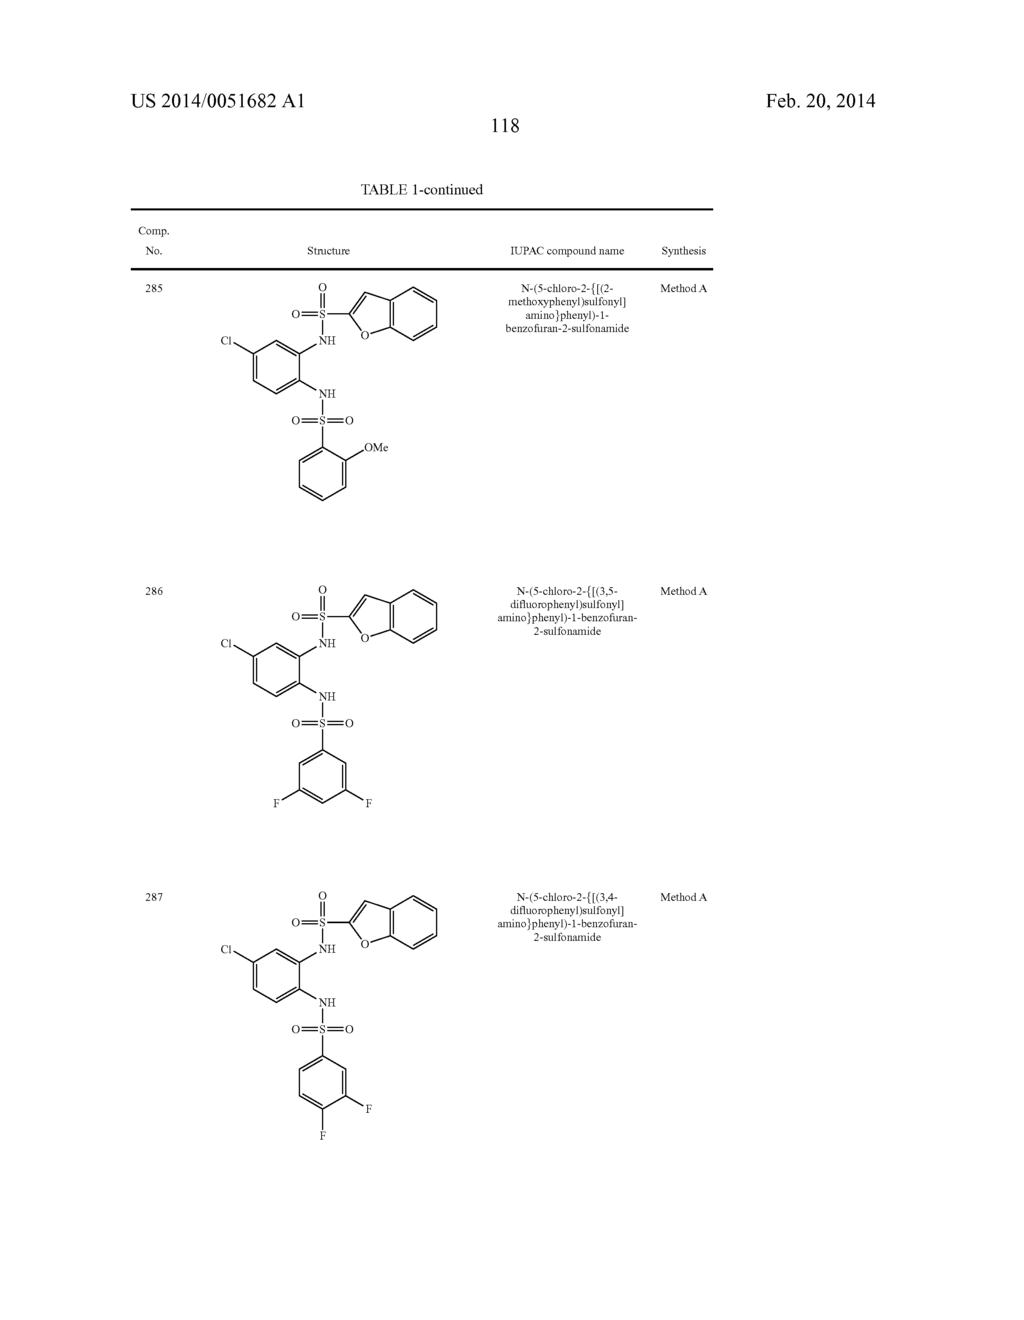 NOVEL 1,2- BIS-SULFONAMIDE DERIVATIVES AS CHEMOKINE RECEPTOR MODULATORS - diagram, schematic, and image 119